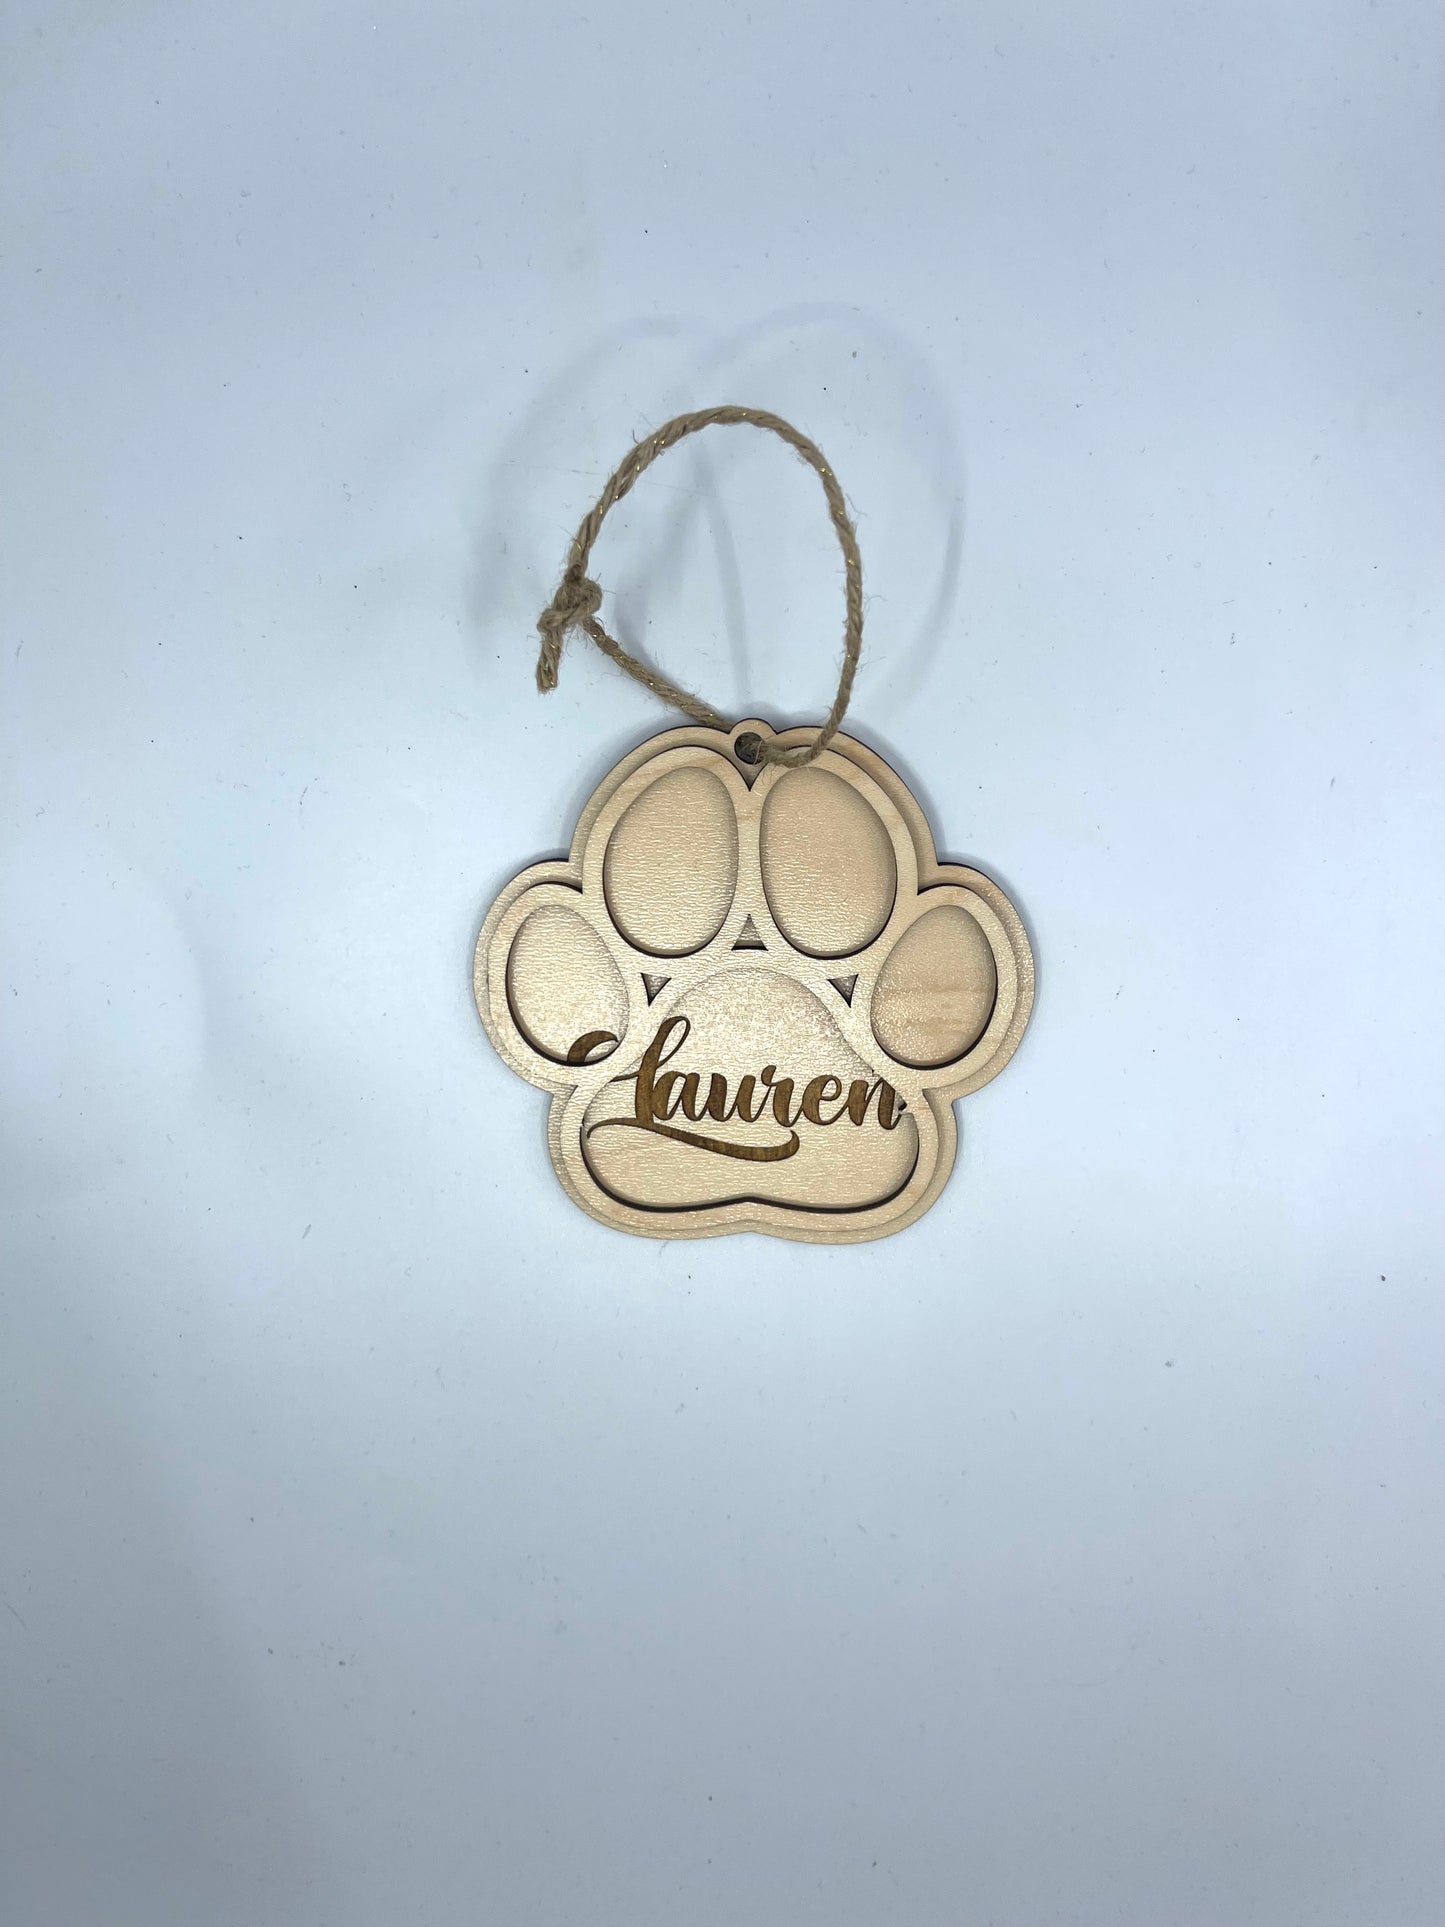 Personalized Paw Print Ornament | Pet Memorial Ornament | Custom Dog or Cat Ornament